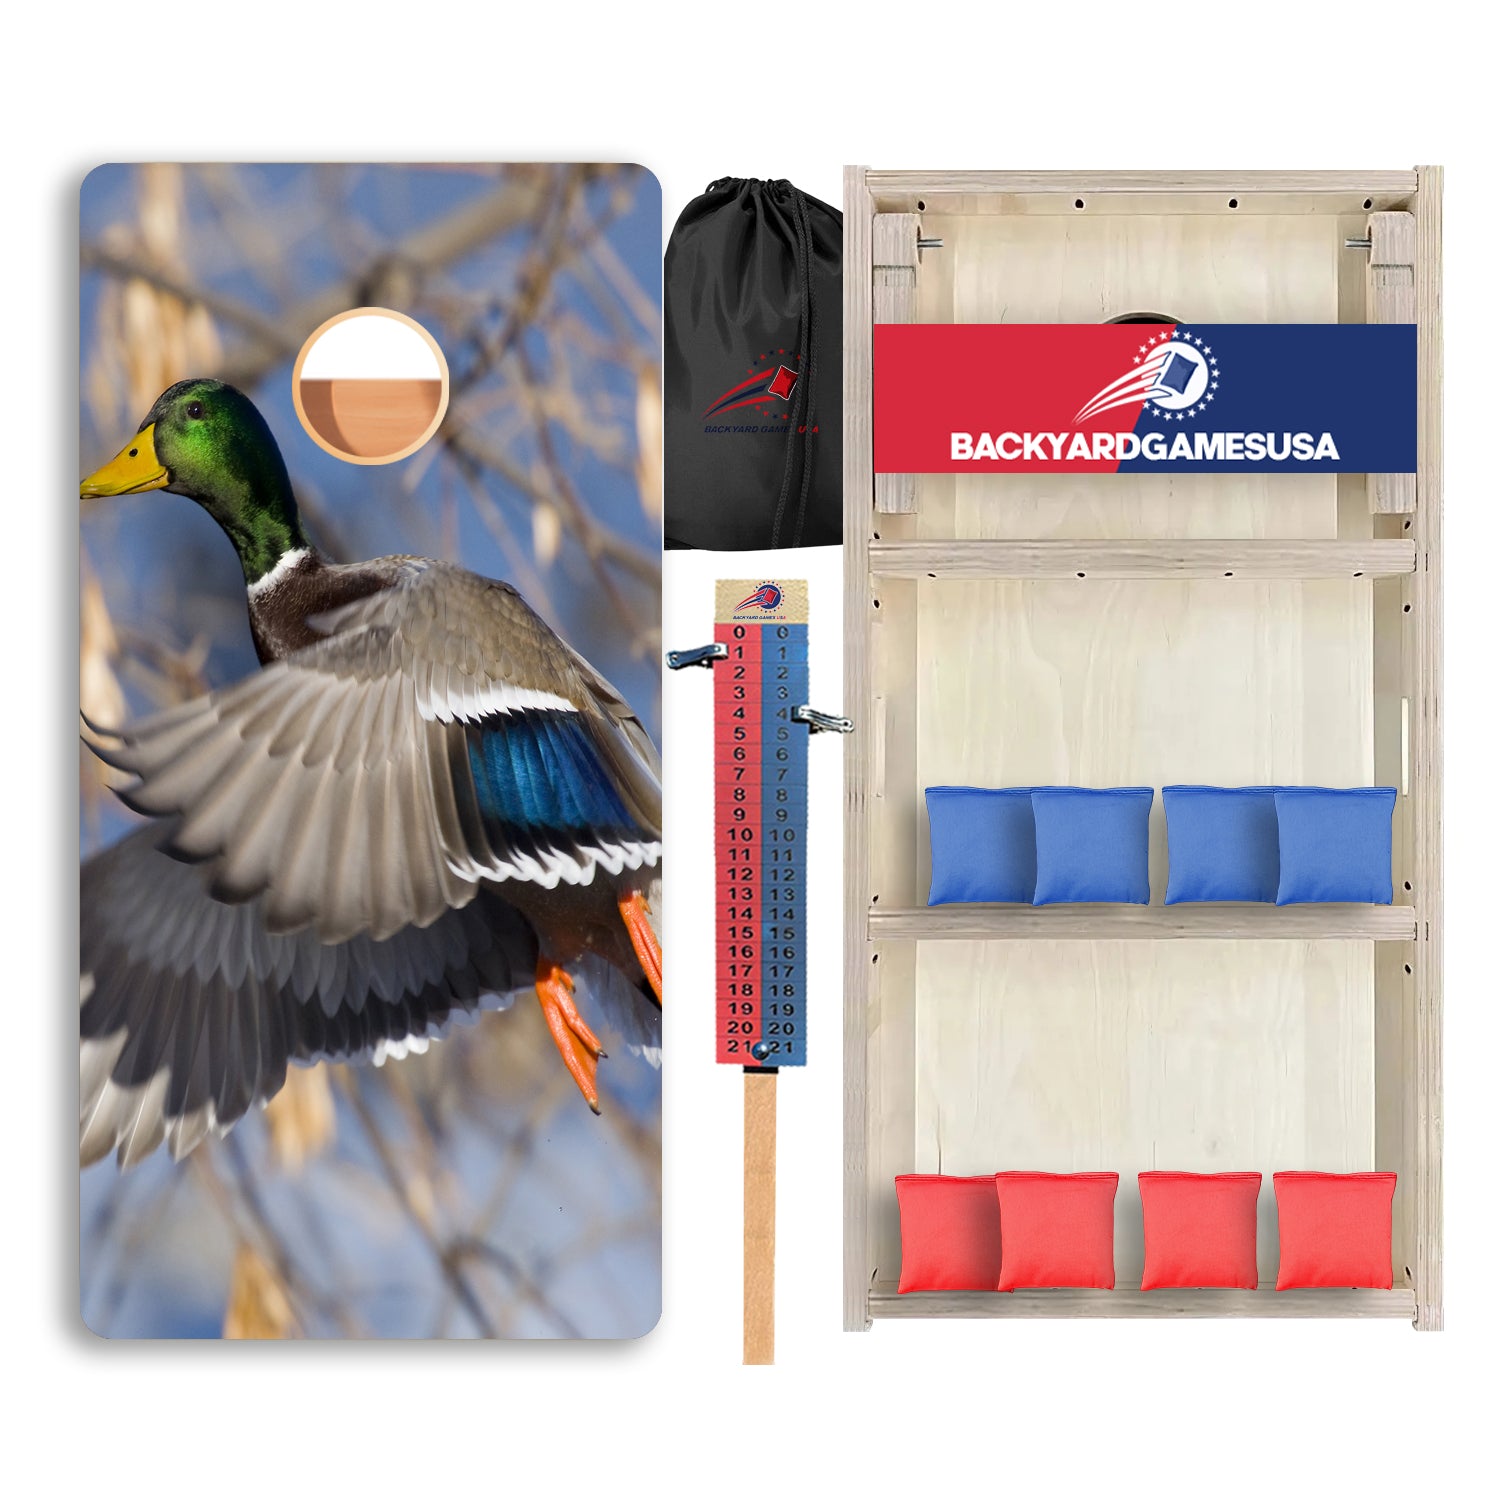 Flying Duck Professional Cornhole Boards